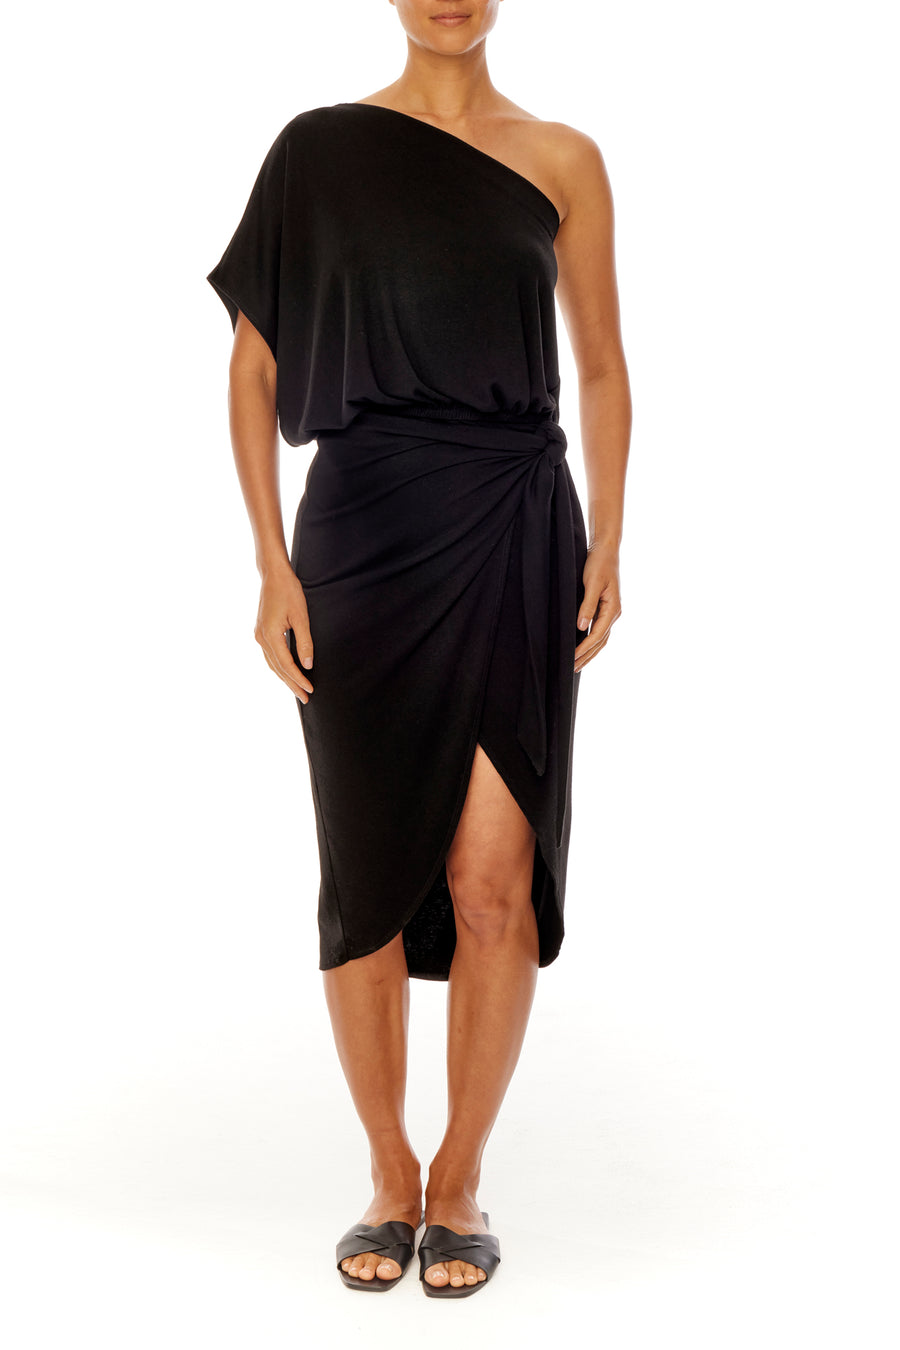 elegant one shoulder dress with draped top, wrap bottom, side tie and tulip hem in black